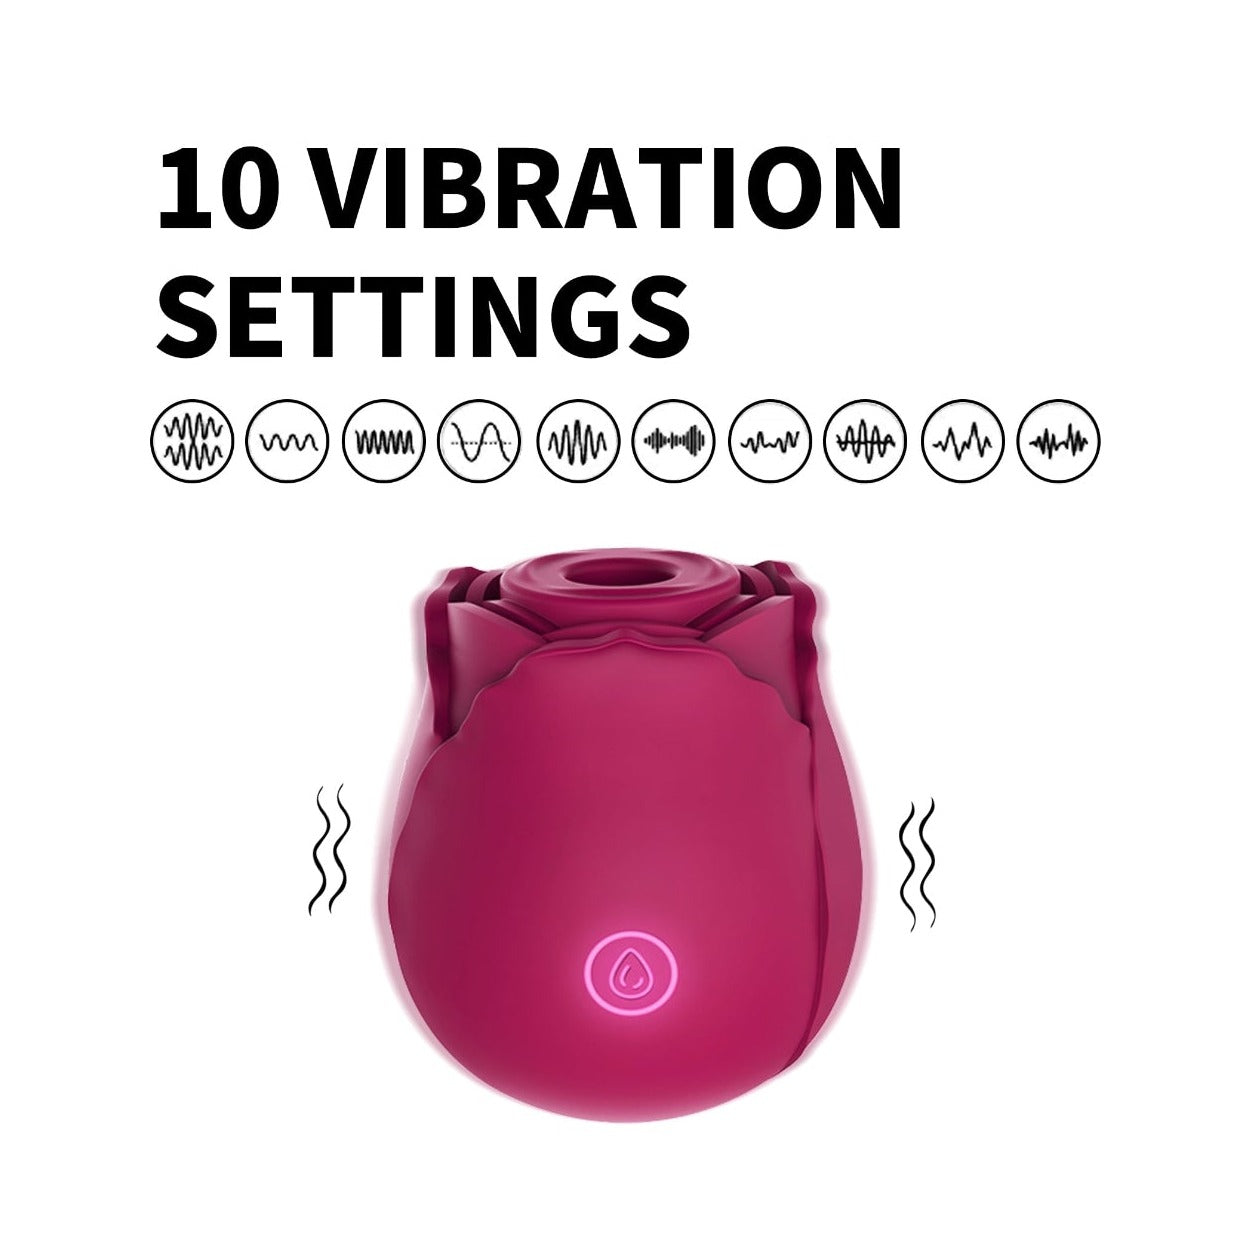 Rose Sucking Vibrator